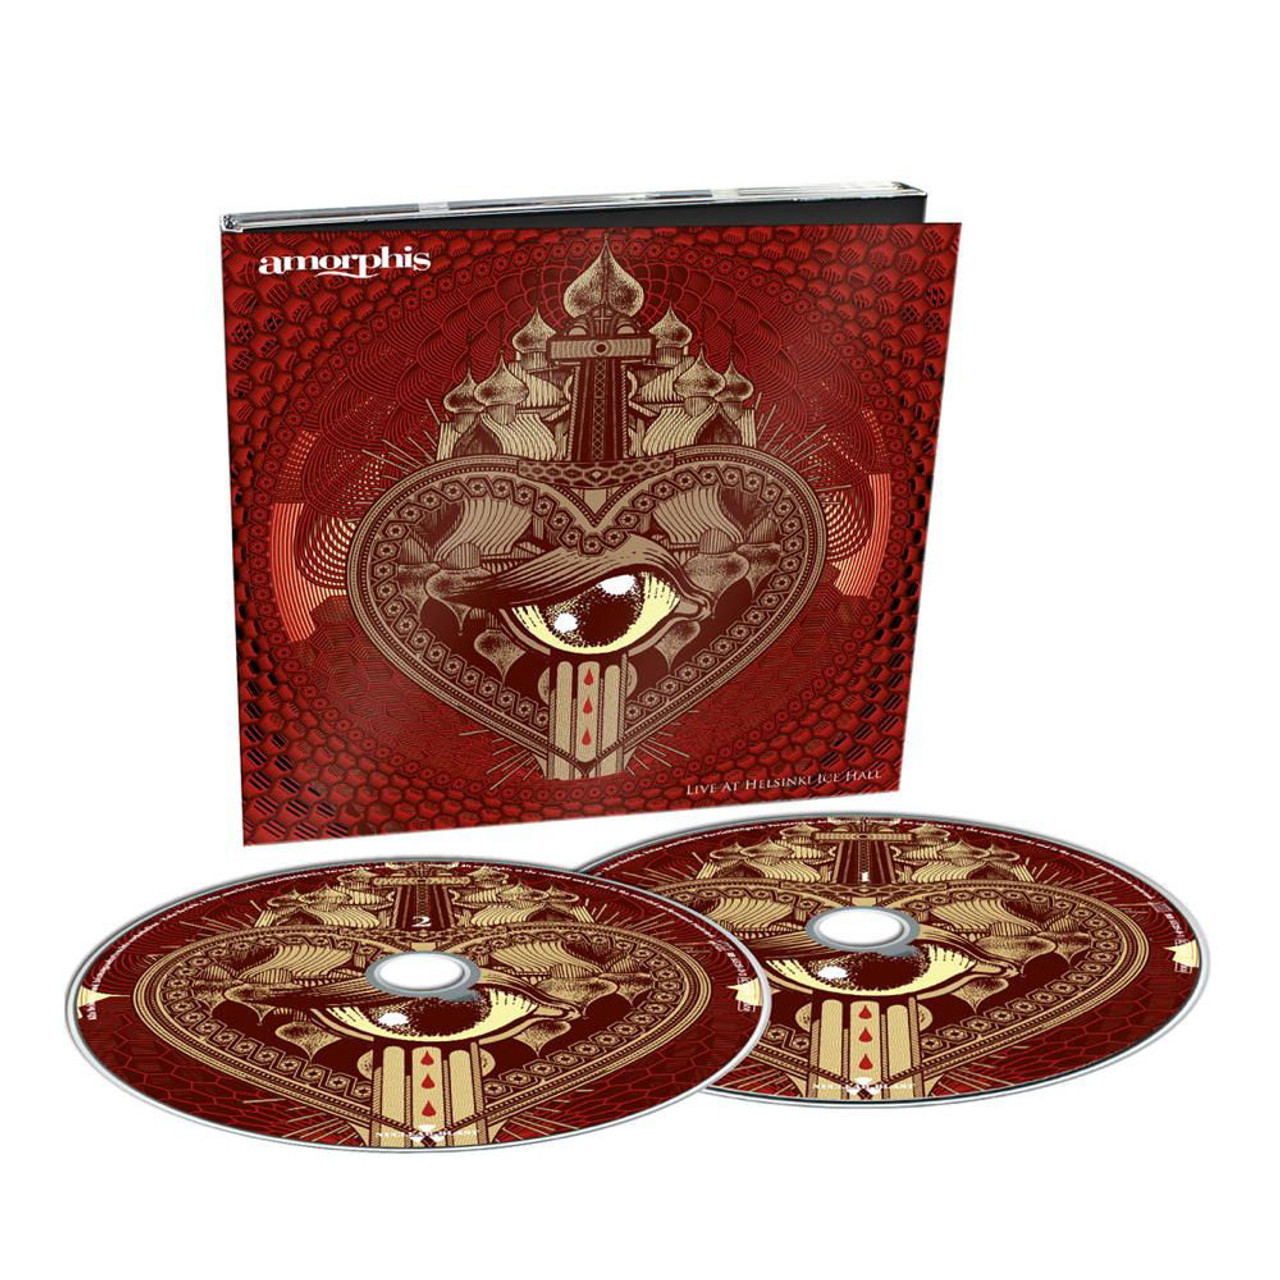 Amorphis 'Live at Helsinki Ice Hall' 2CD Digipak